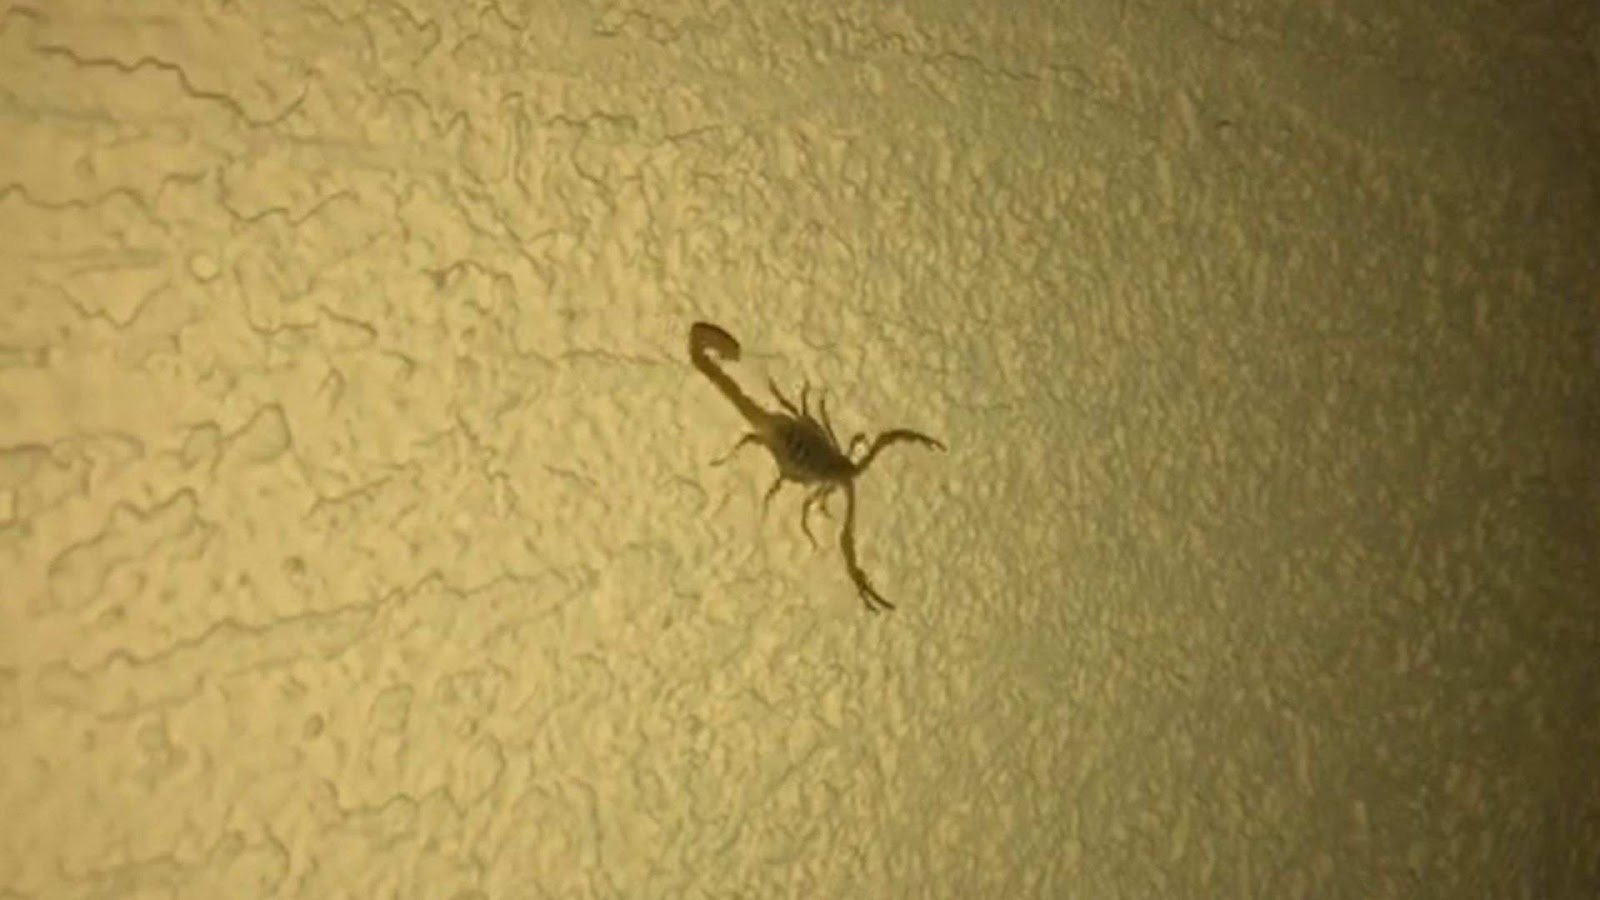 How do scorpions climb on the walls?